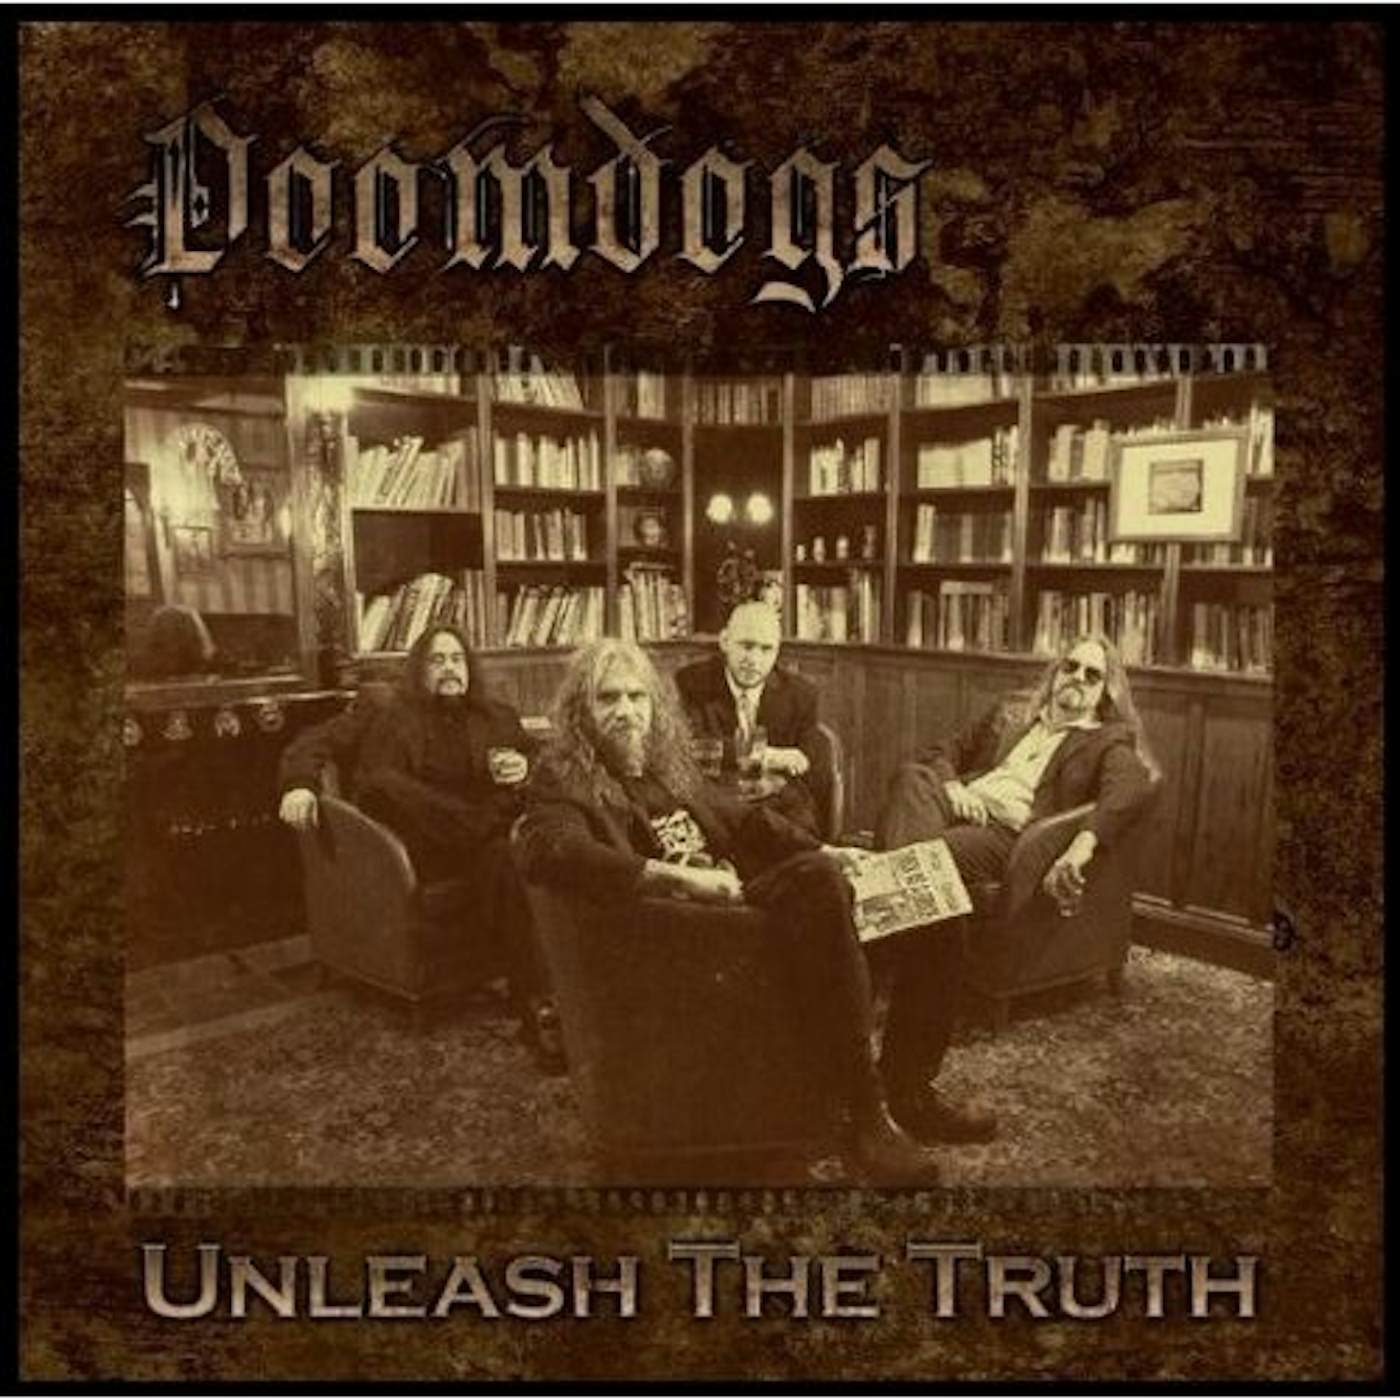 Doomdogs UNLEASH THE TRUTH CD